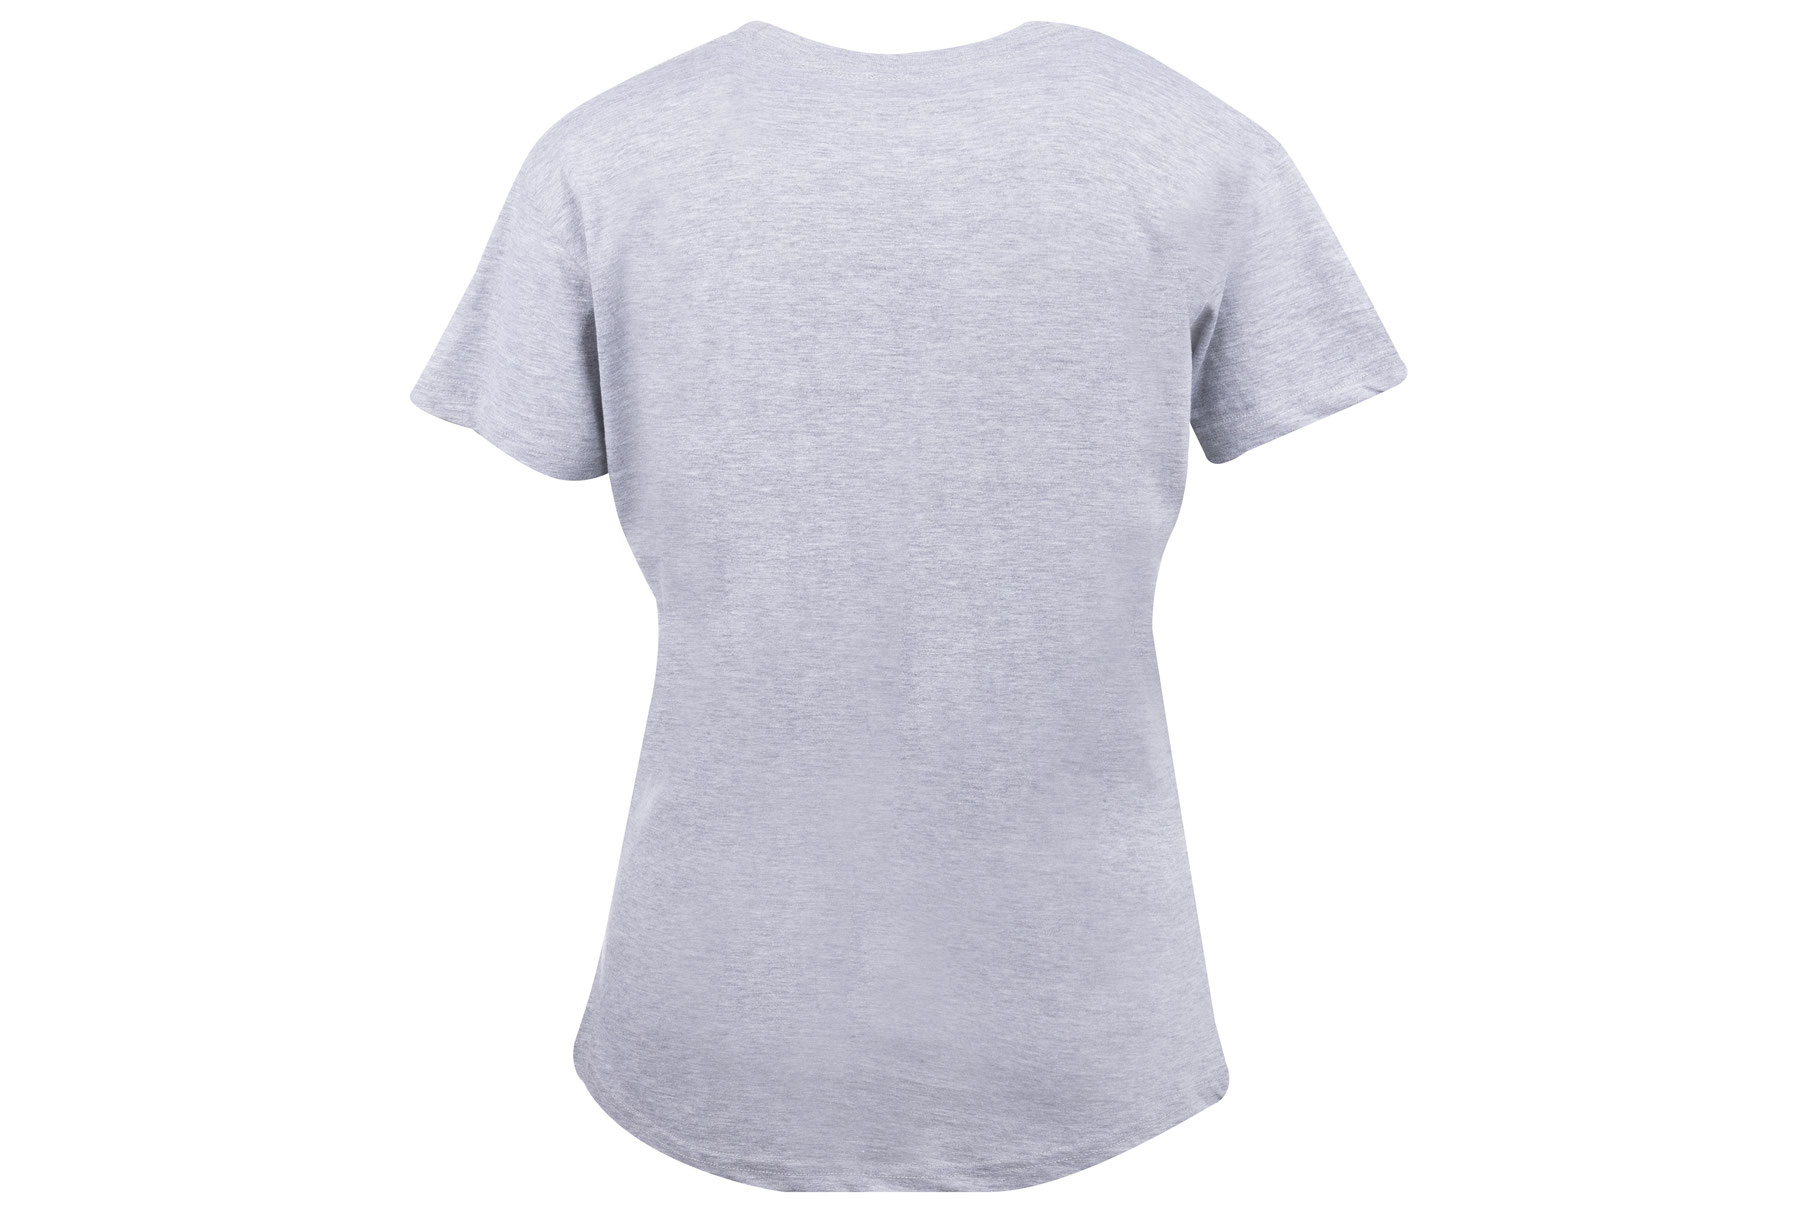 Cabrinha T-Shirts Woman / Cabrinha T-Shirts Frauen - WindSucht Kite ...